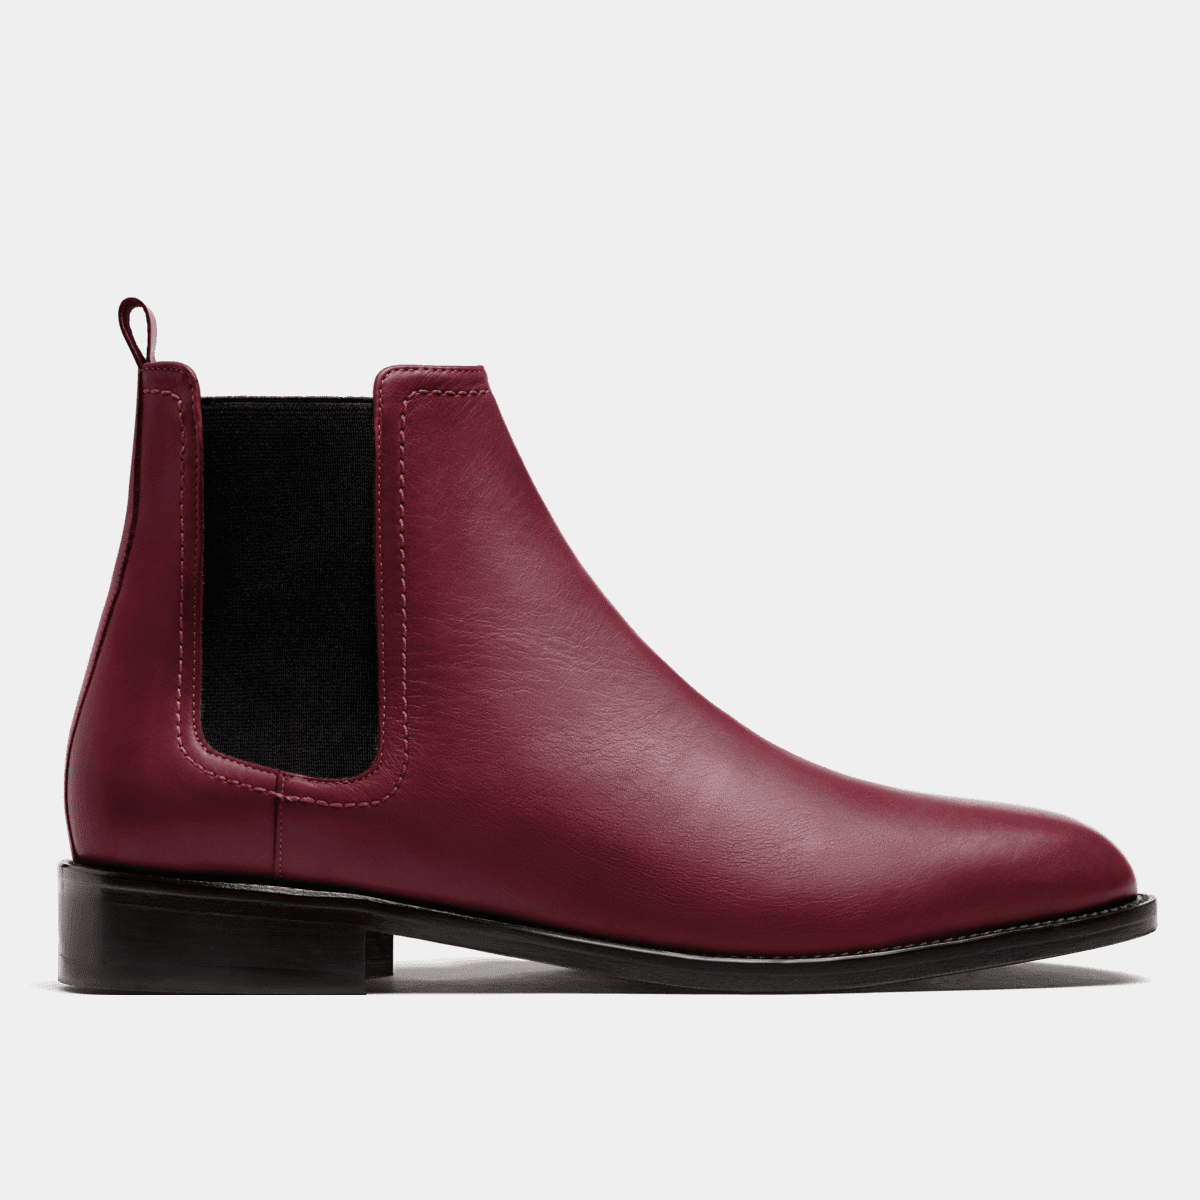 Chelsea Boots - burgundy italian leather